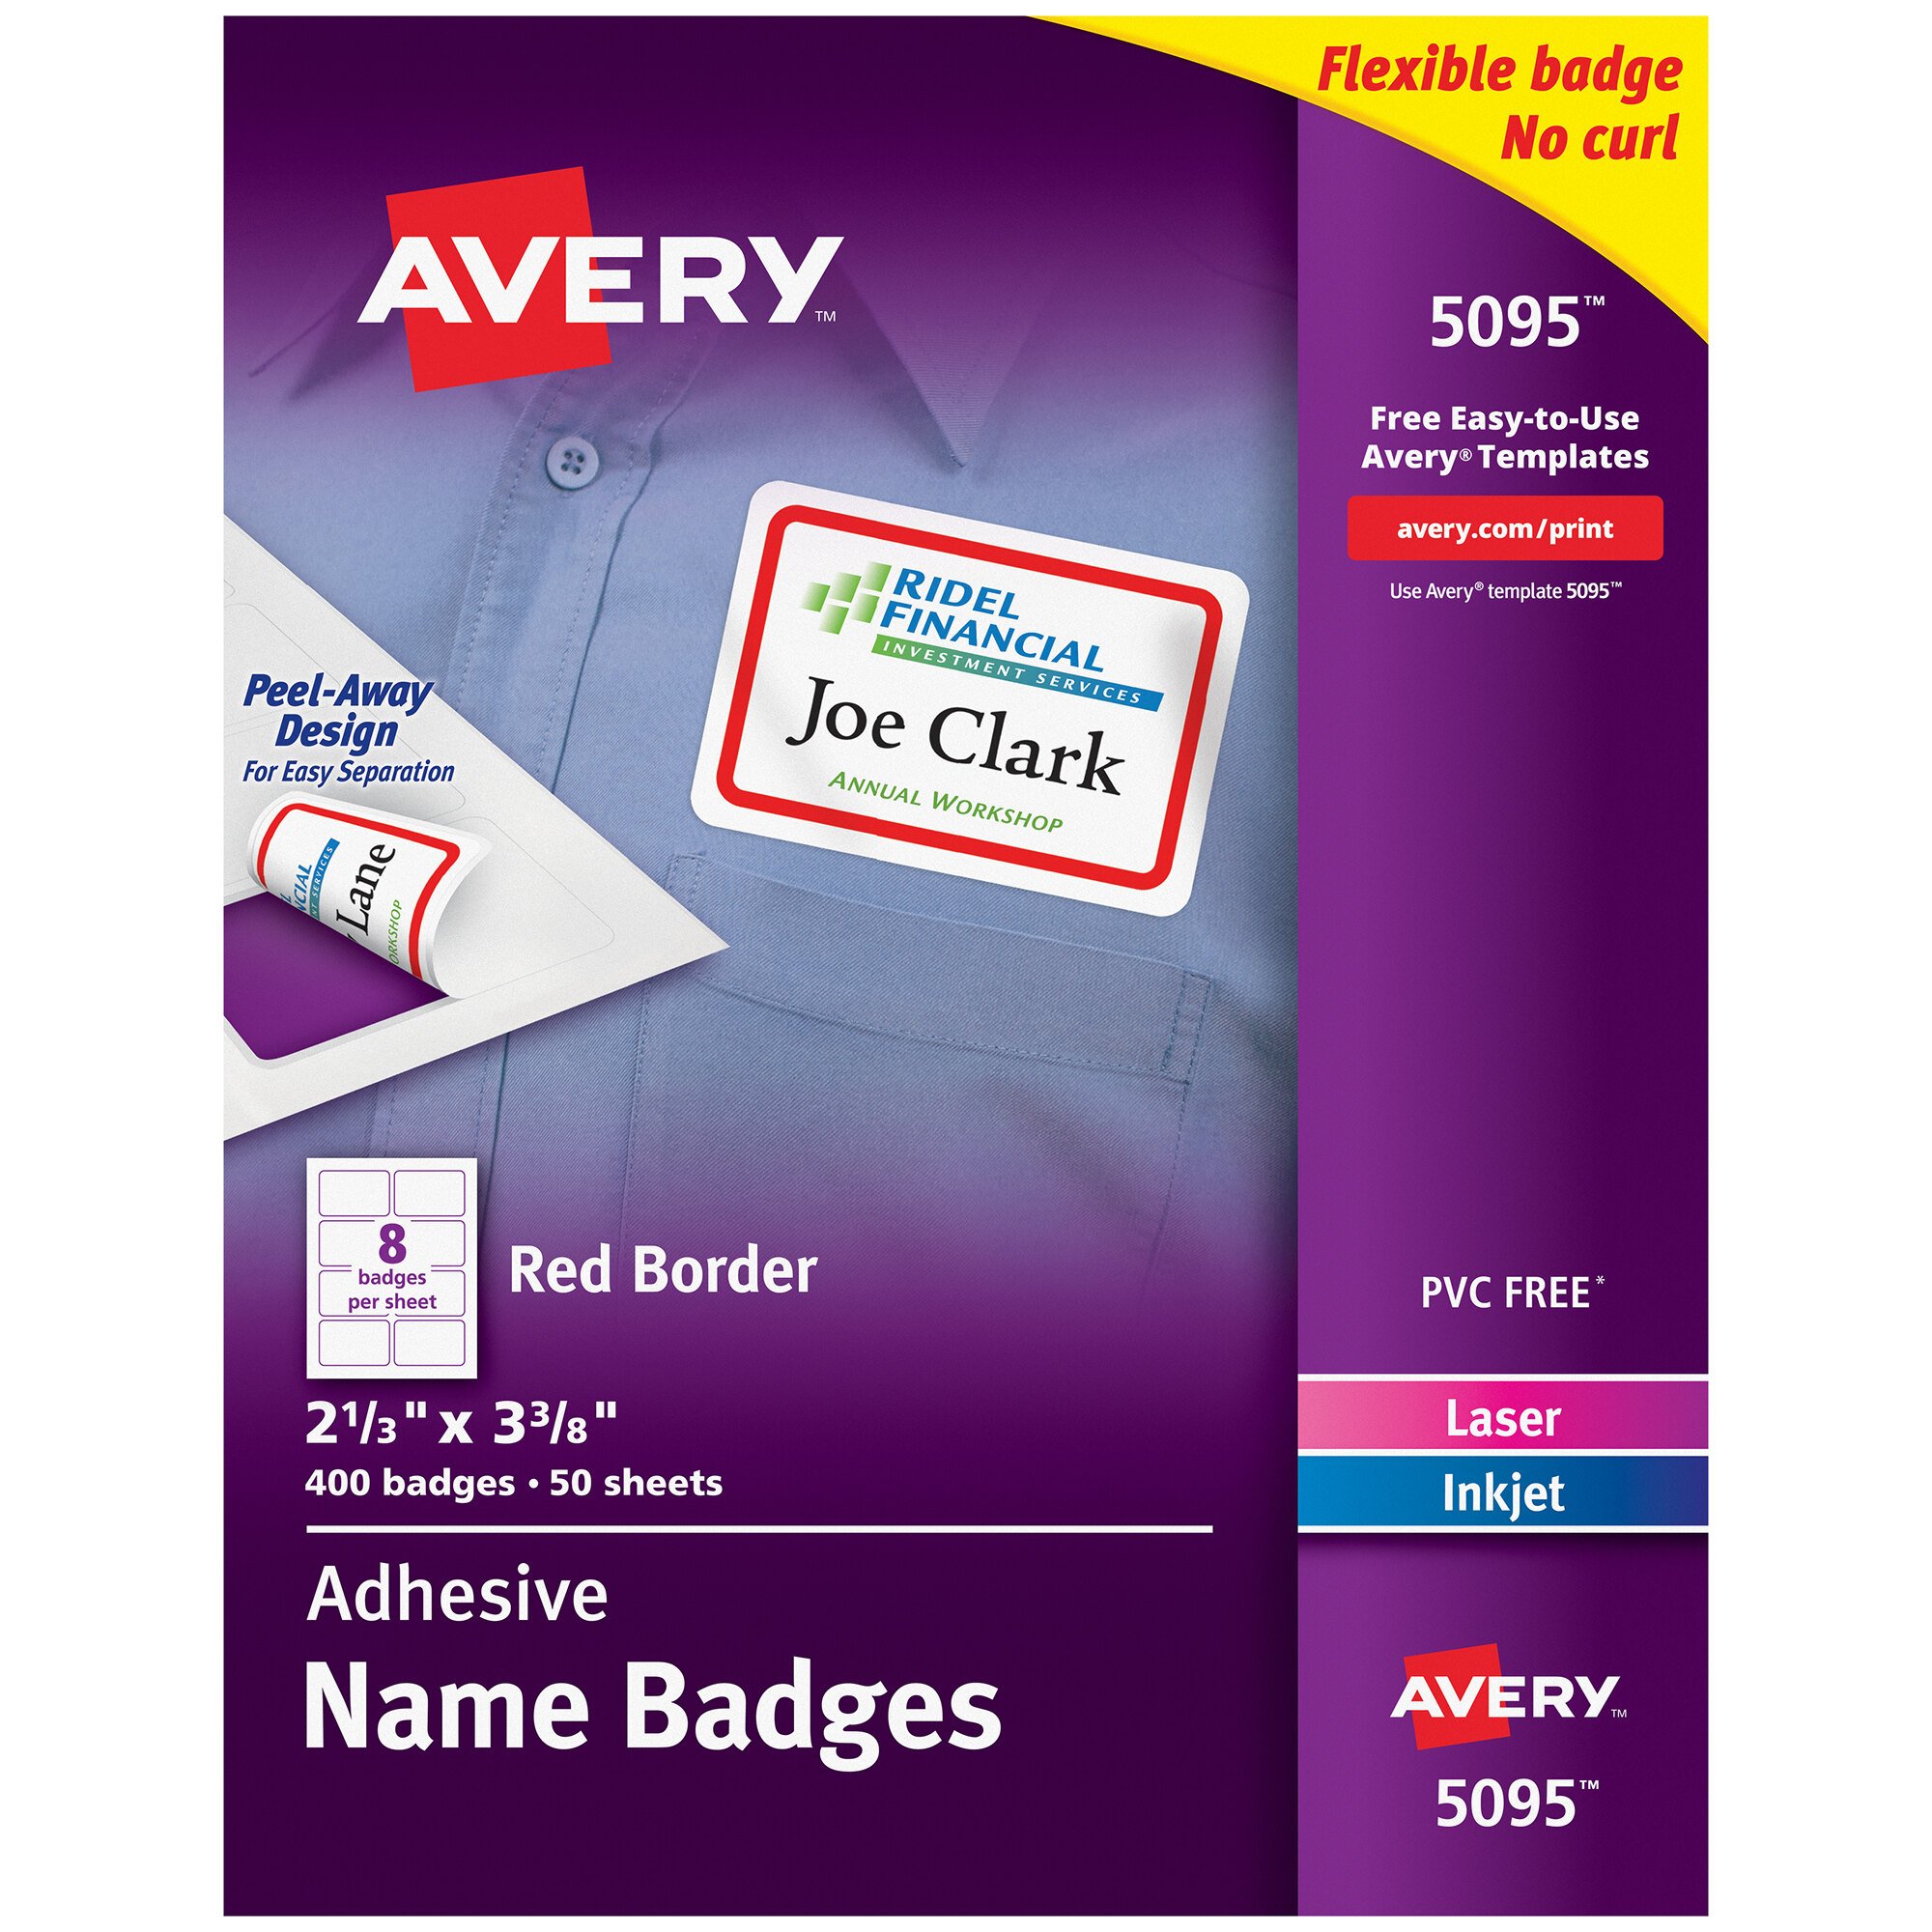 avery-5095-2-1-3-x-3-3-8-flexible-self-adhesive-laser-inkjet-name